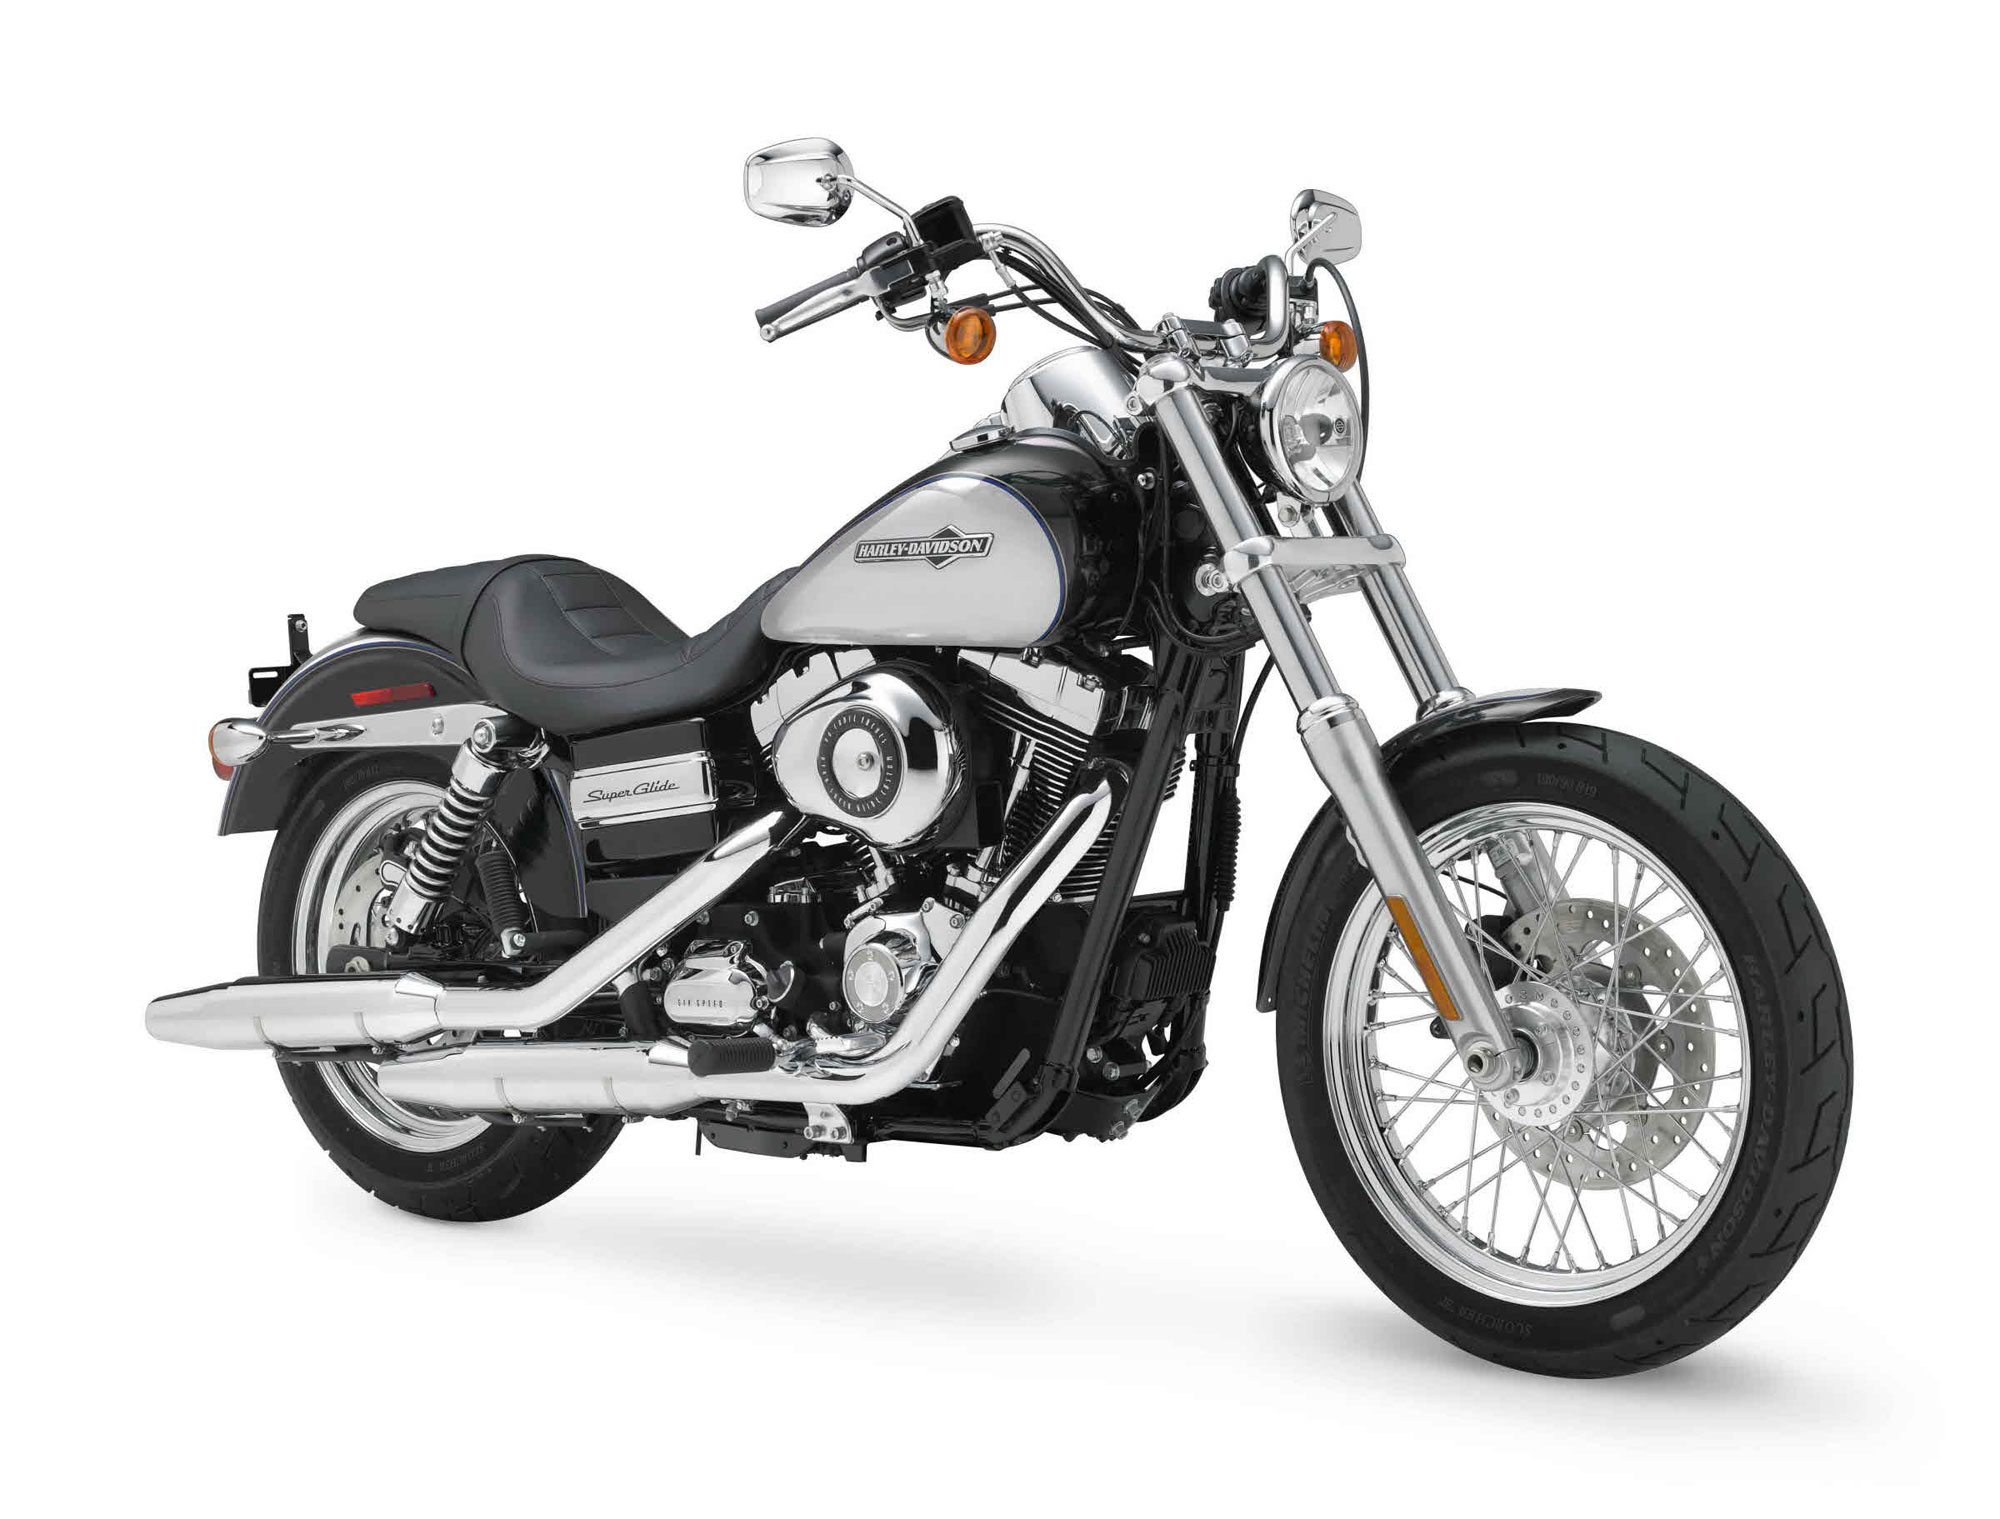 2012 Harley Davidson Fxdc Dyna Super Glide Custom Review